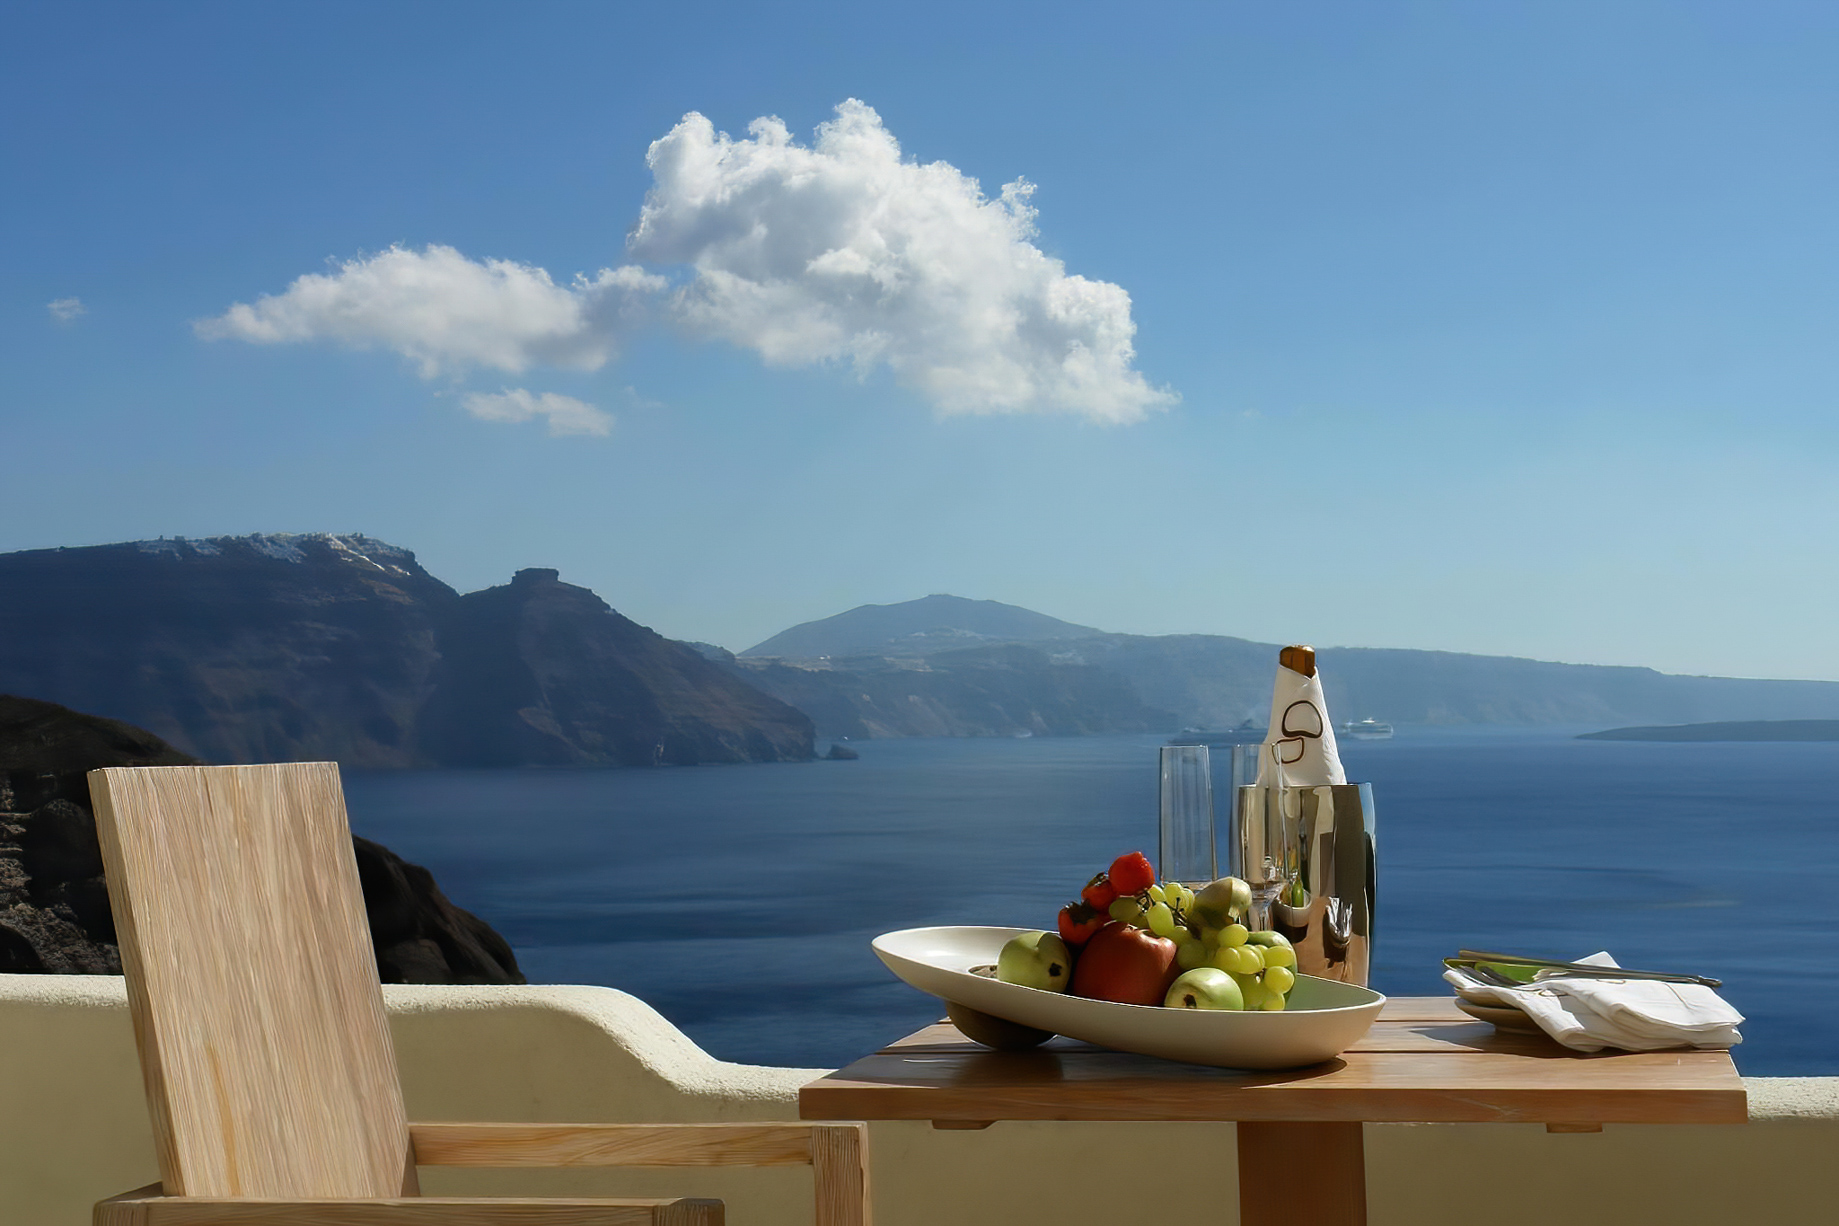 Mystique Hotel Santorini – Oia, Santorini Island, Greece - Clifftop Ocean View Dining